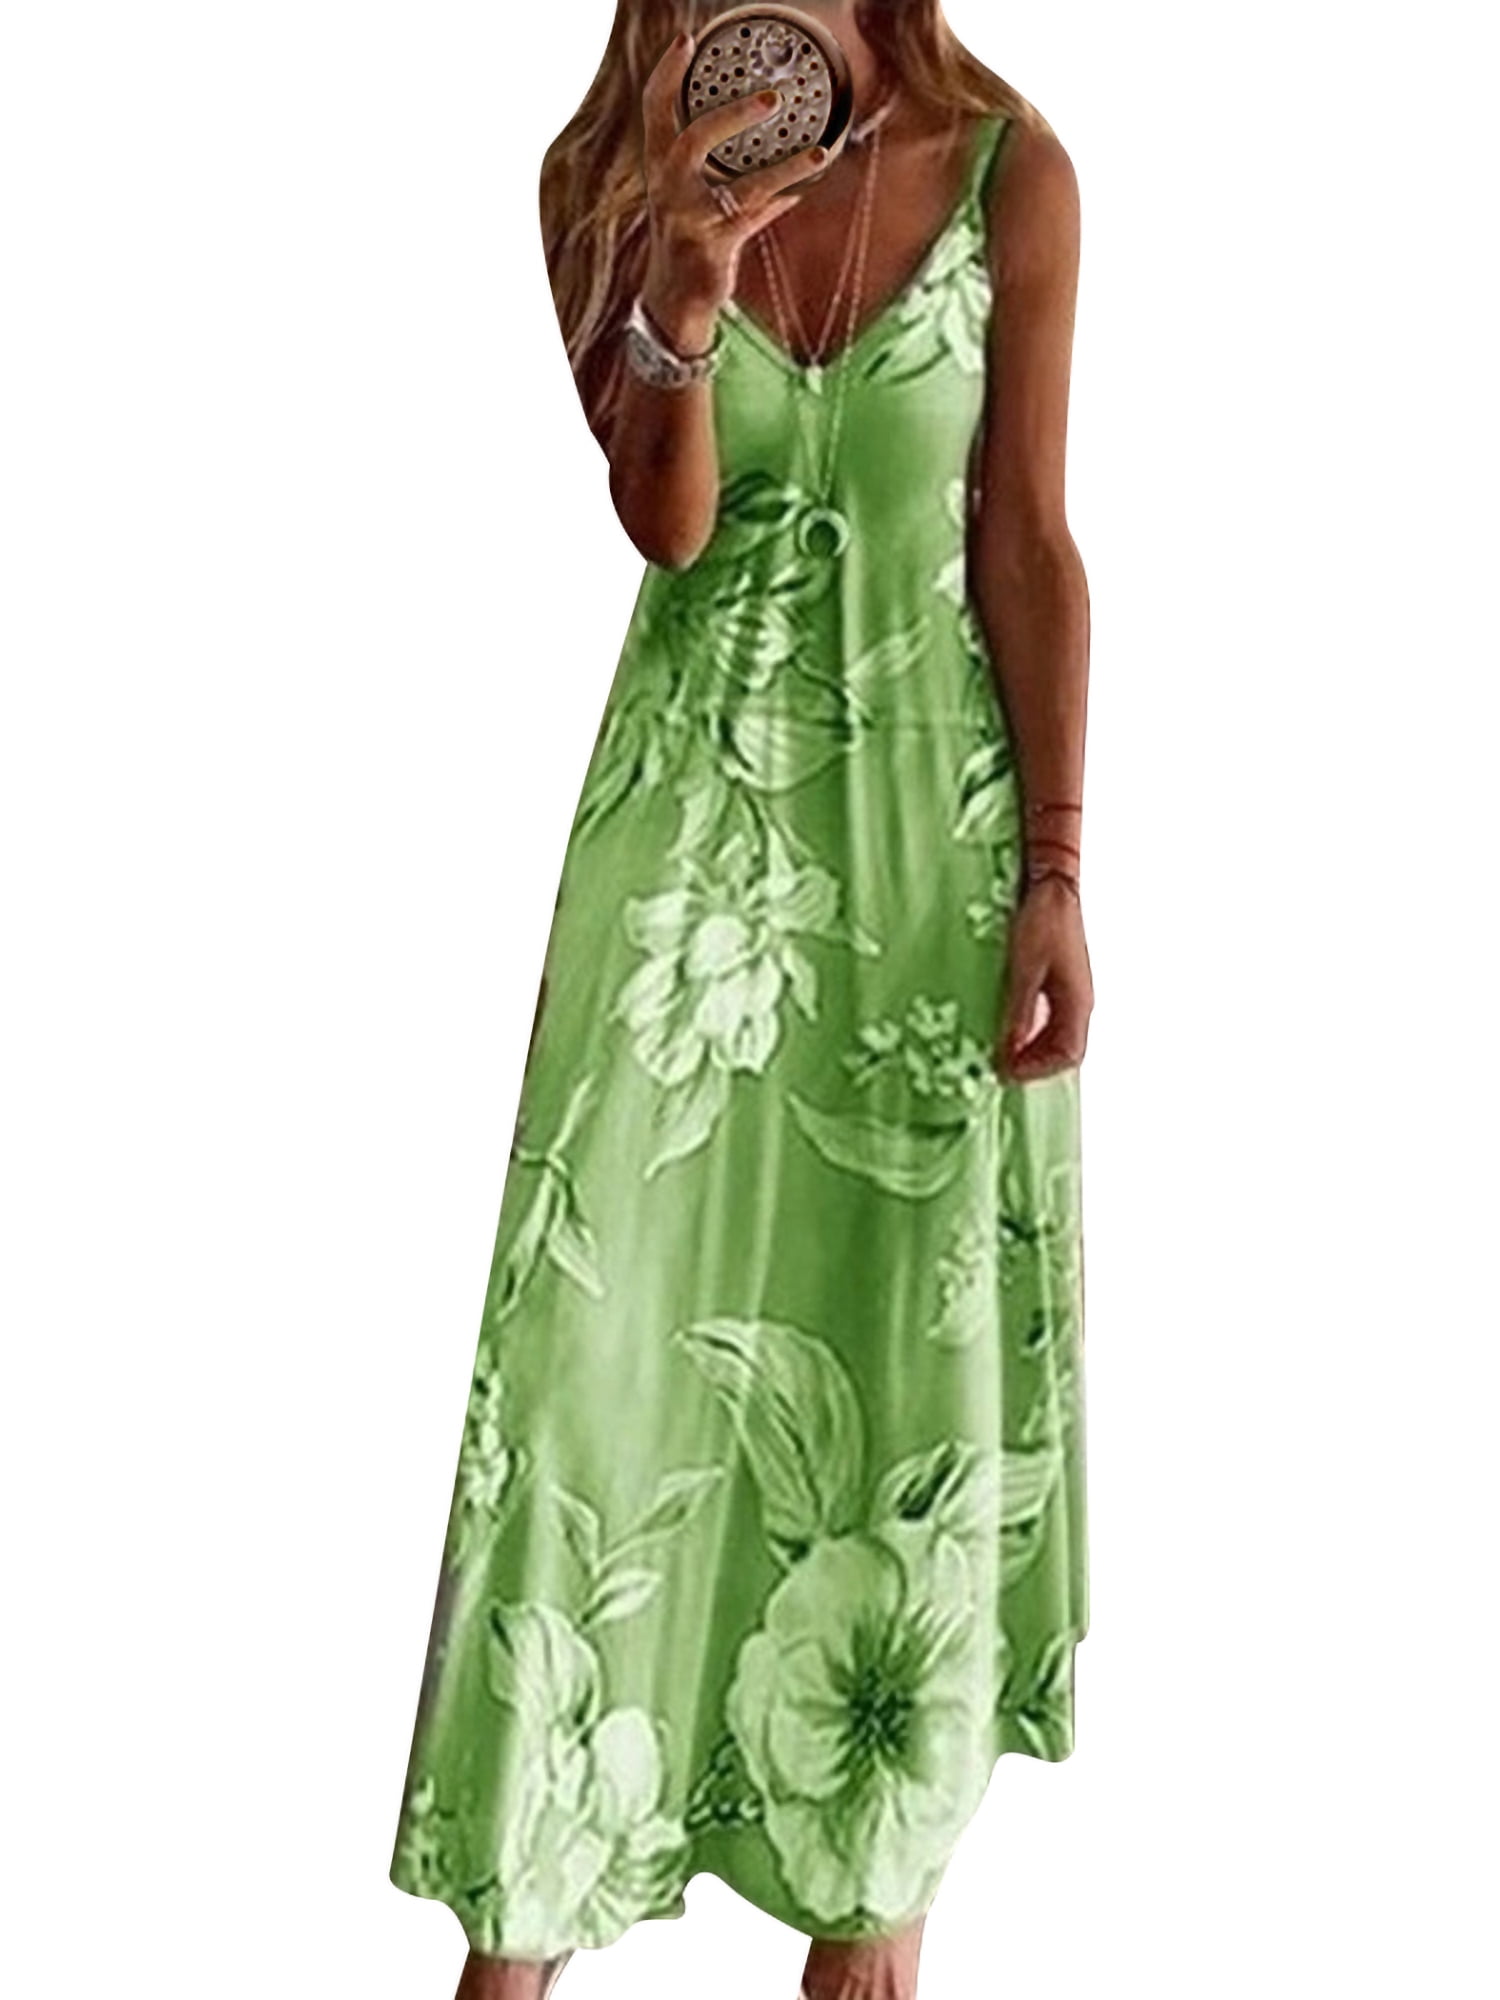 HIMONE Womens Spaghetti Strap Night Dress Ladies Casual Floral Print ...